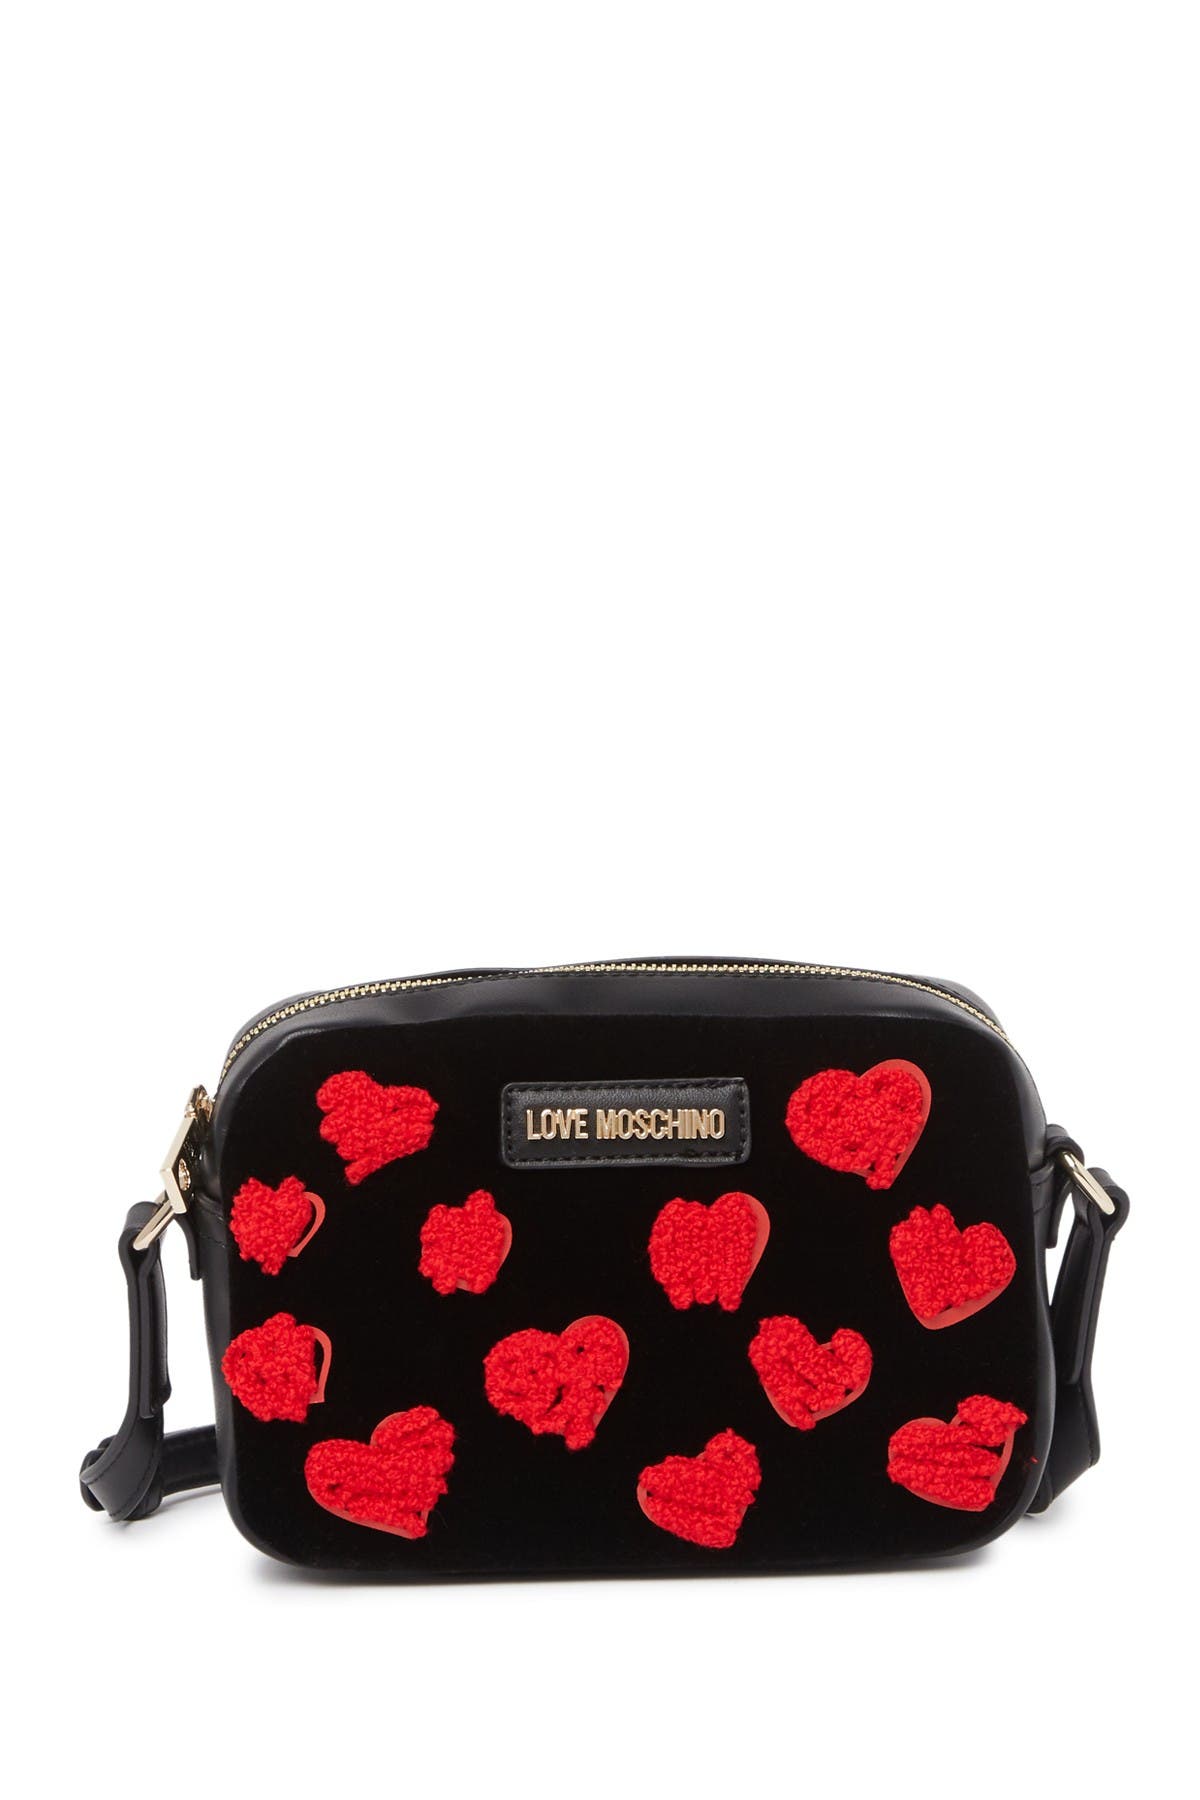 love moschino heart crossbody bag